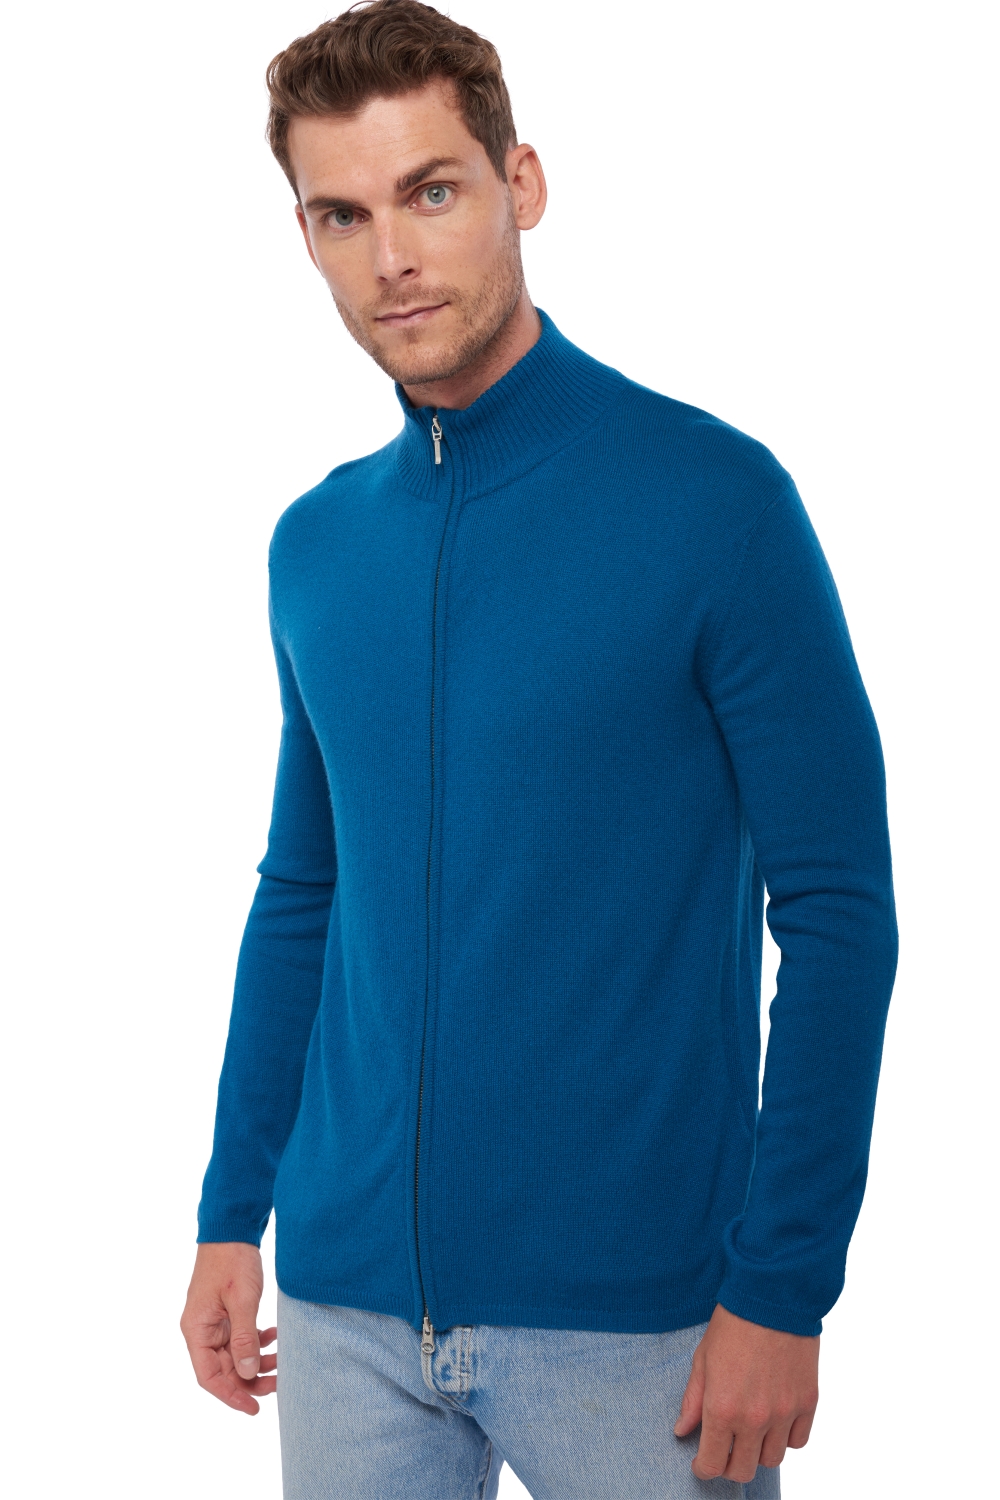 Cashmere men waistcoat sleeveless sweaters elton canard blue s